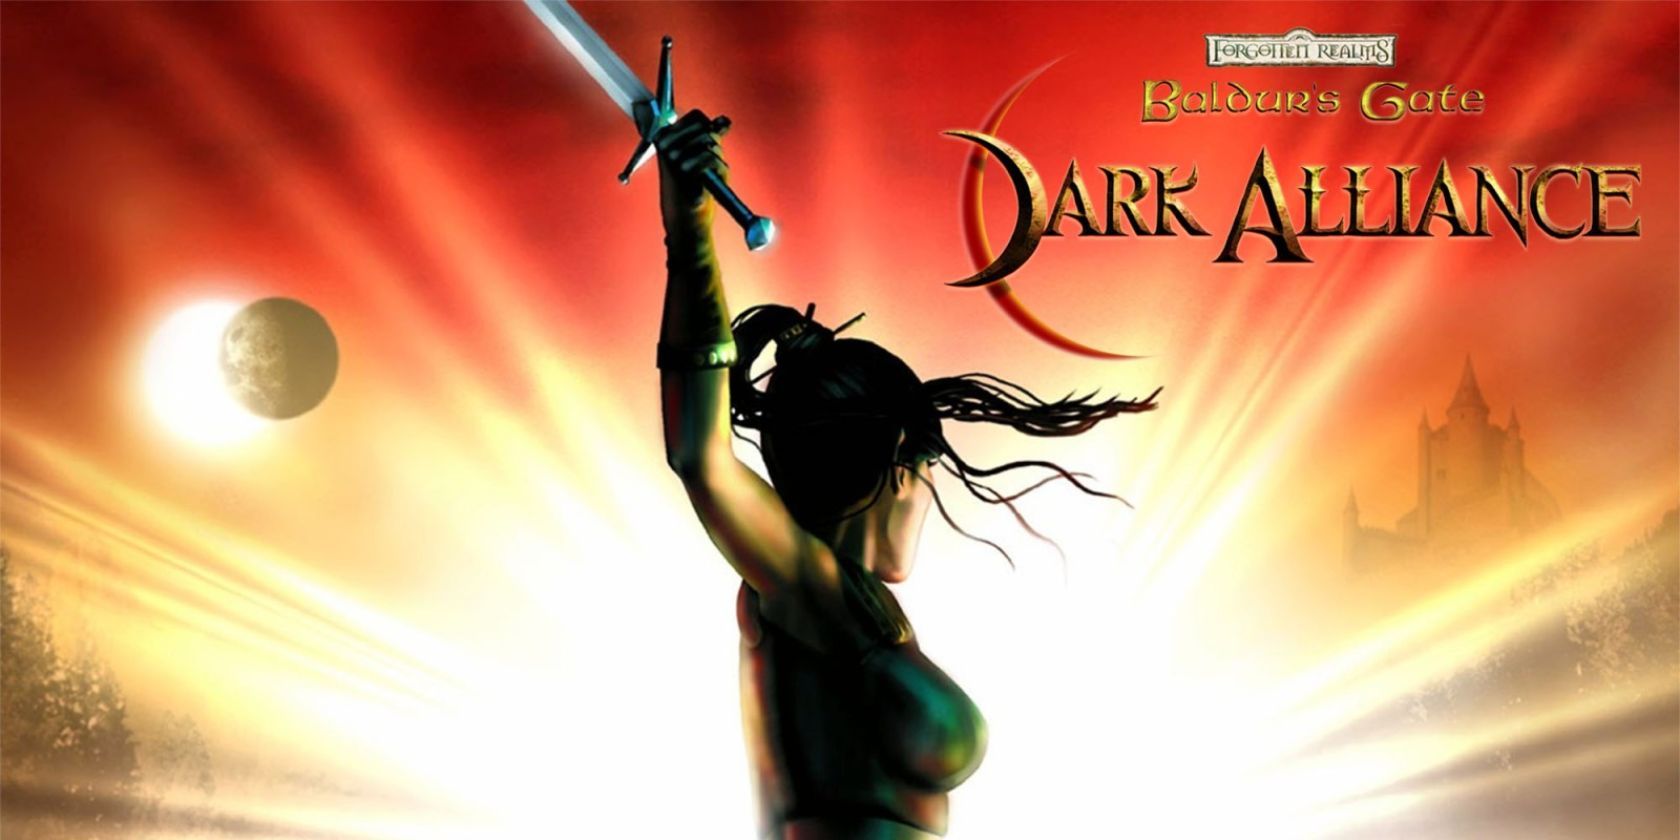 Baldur's Gate: Dark Alliance Available on Android - Baldur's Gate - Dark  Alliance - TapTap